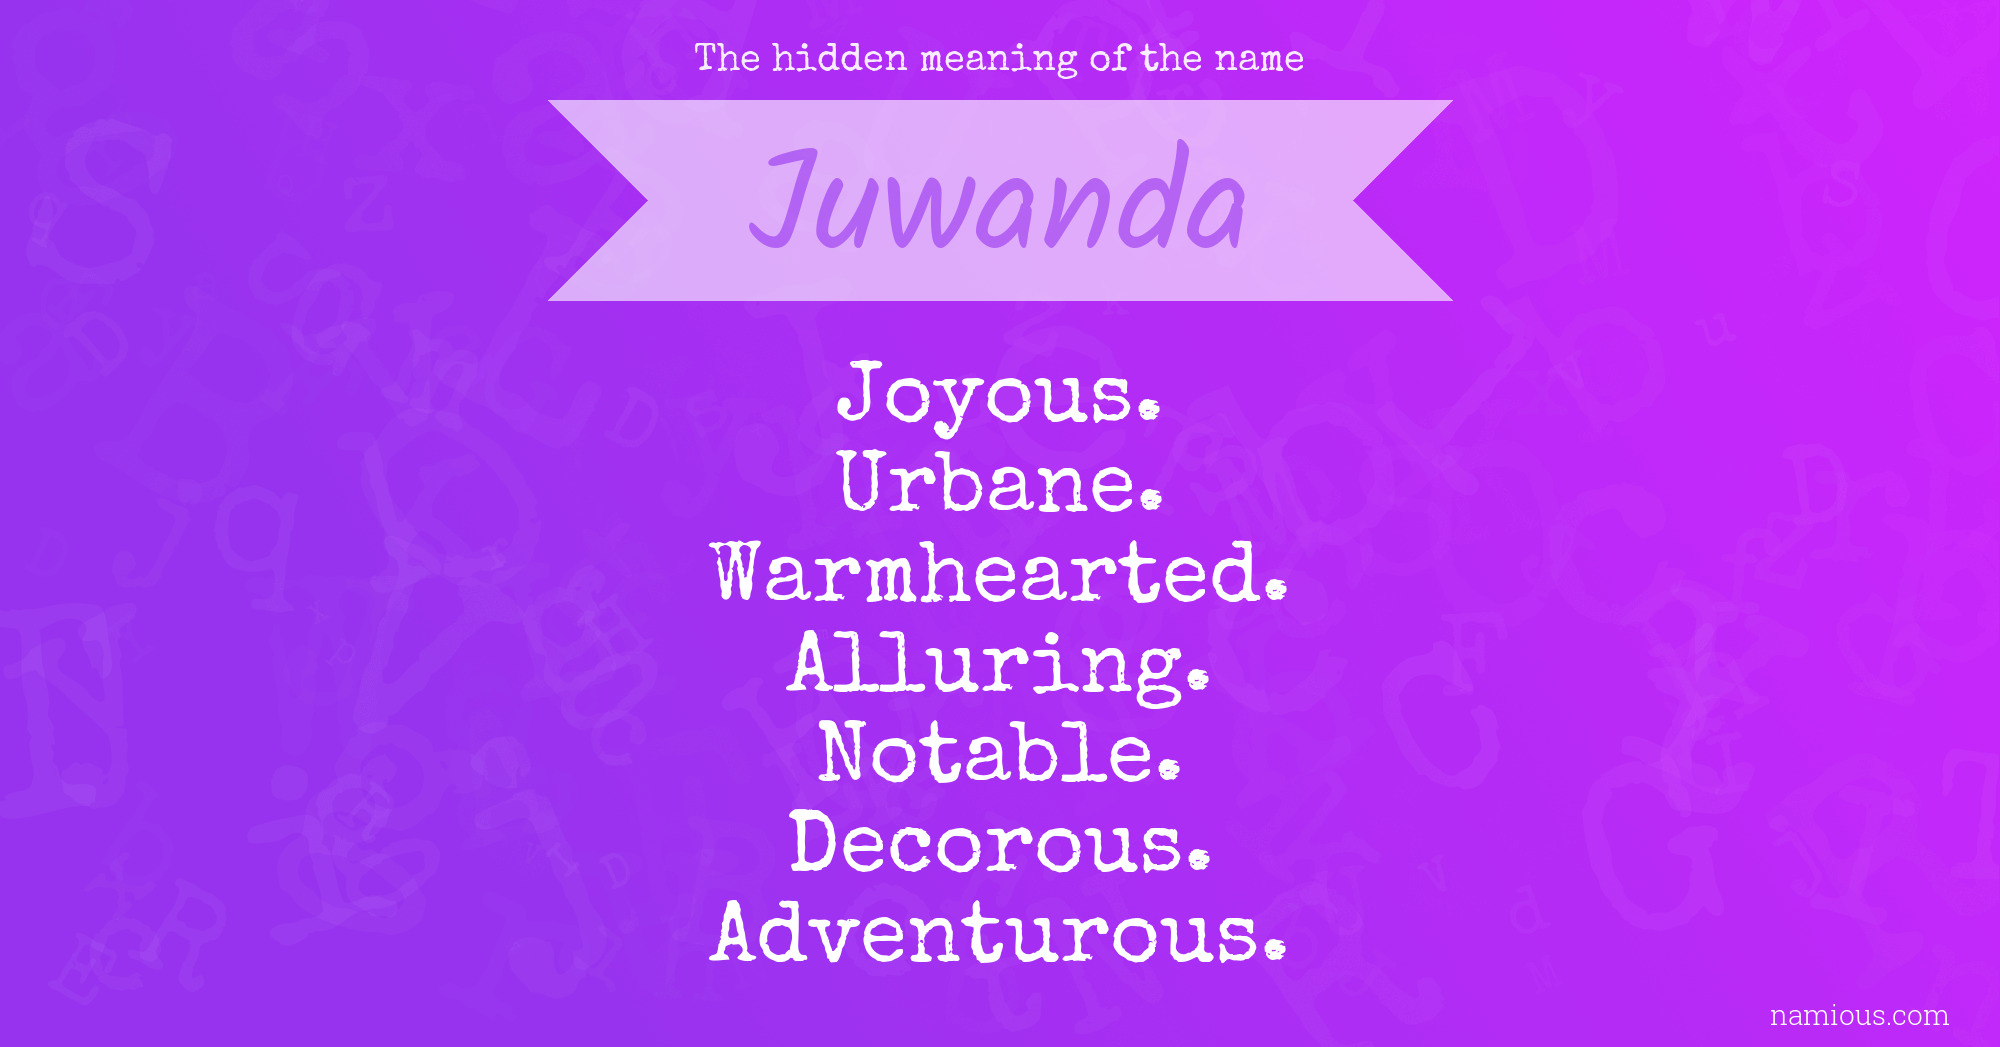 The hidden meaning of the name Juwanda